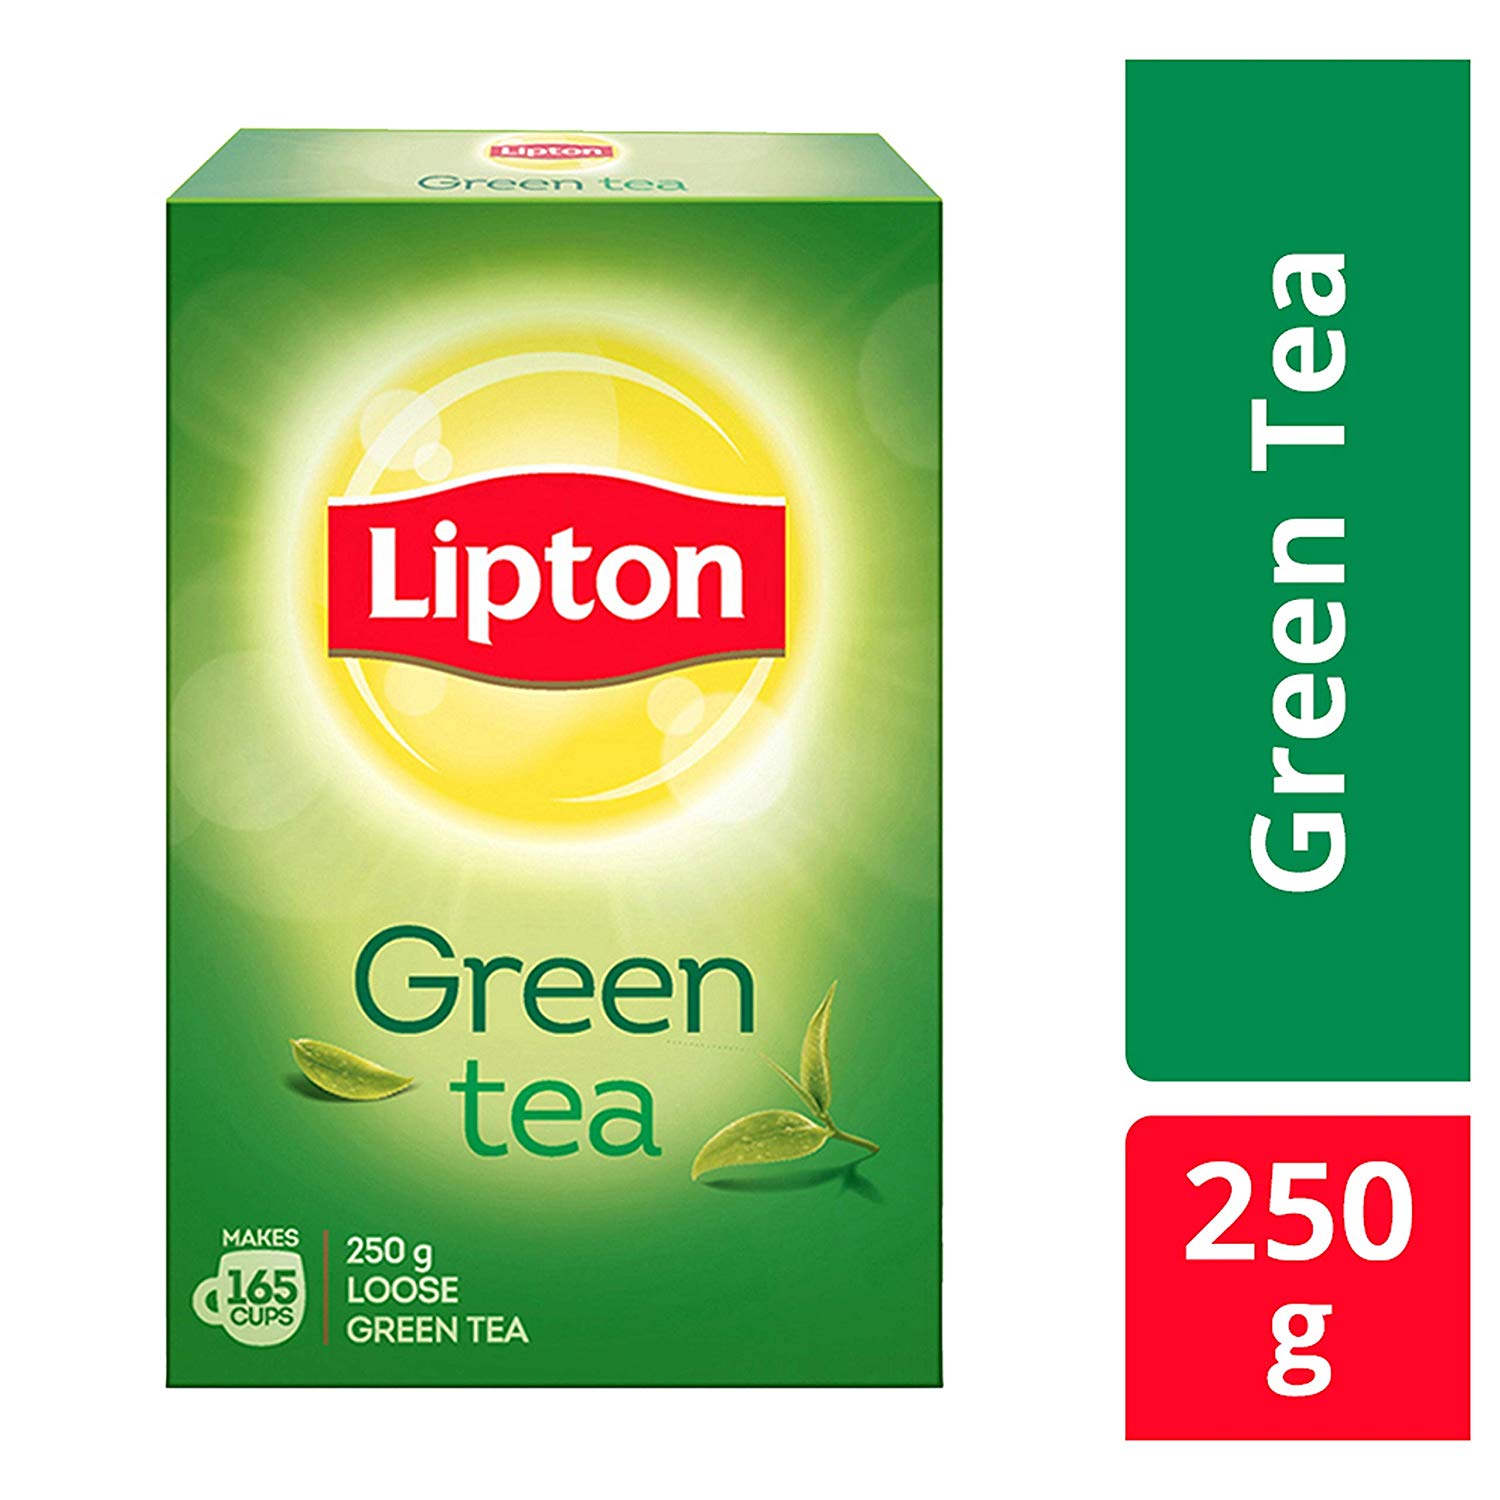 Lipton Loose Green Tea, 250g - Loot Deal - The Baap of Loot